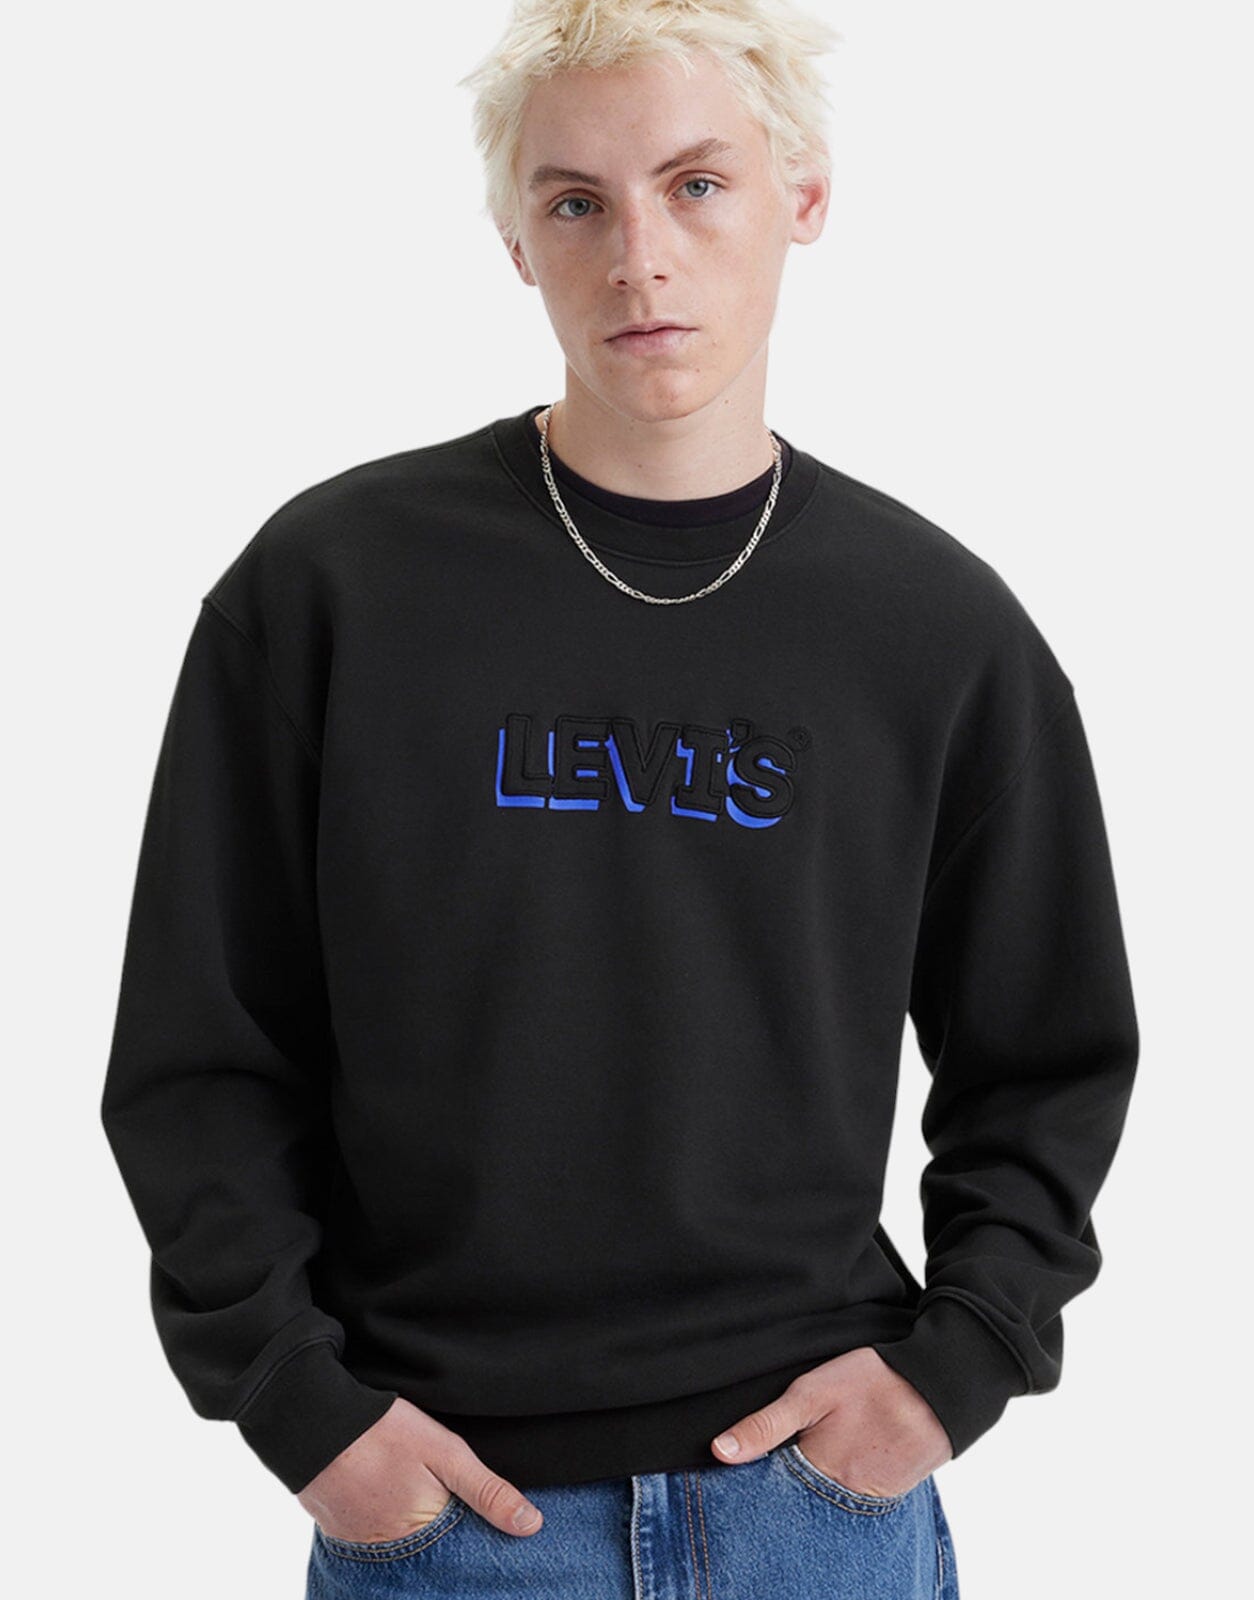 Levis Relaxed Graphic Crew Sweatshirt - Subwear